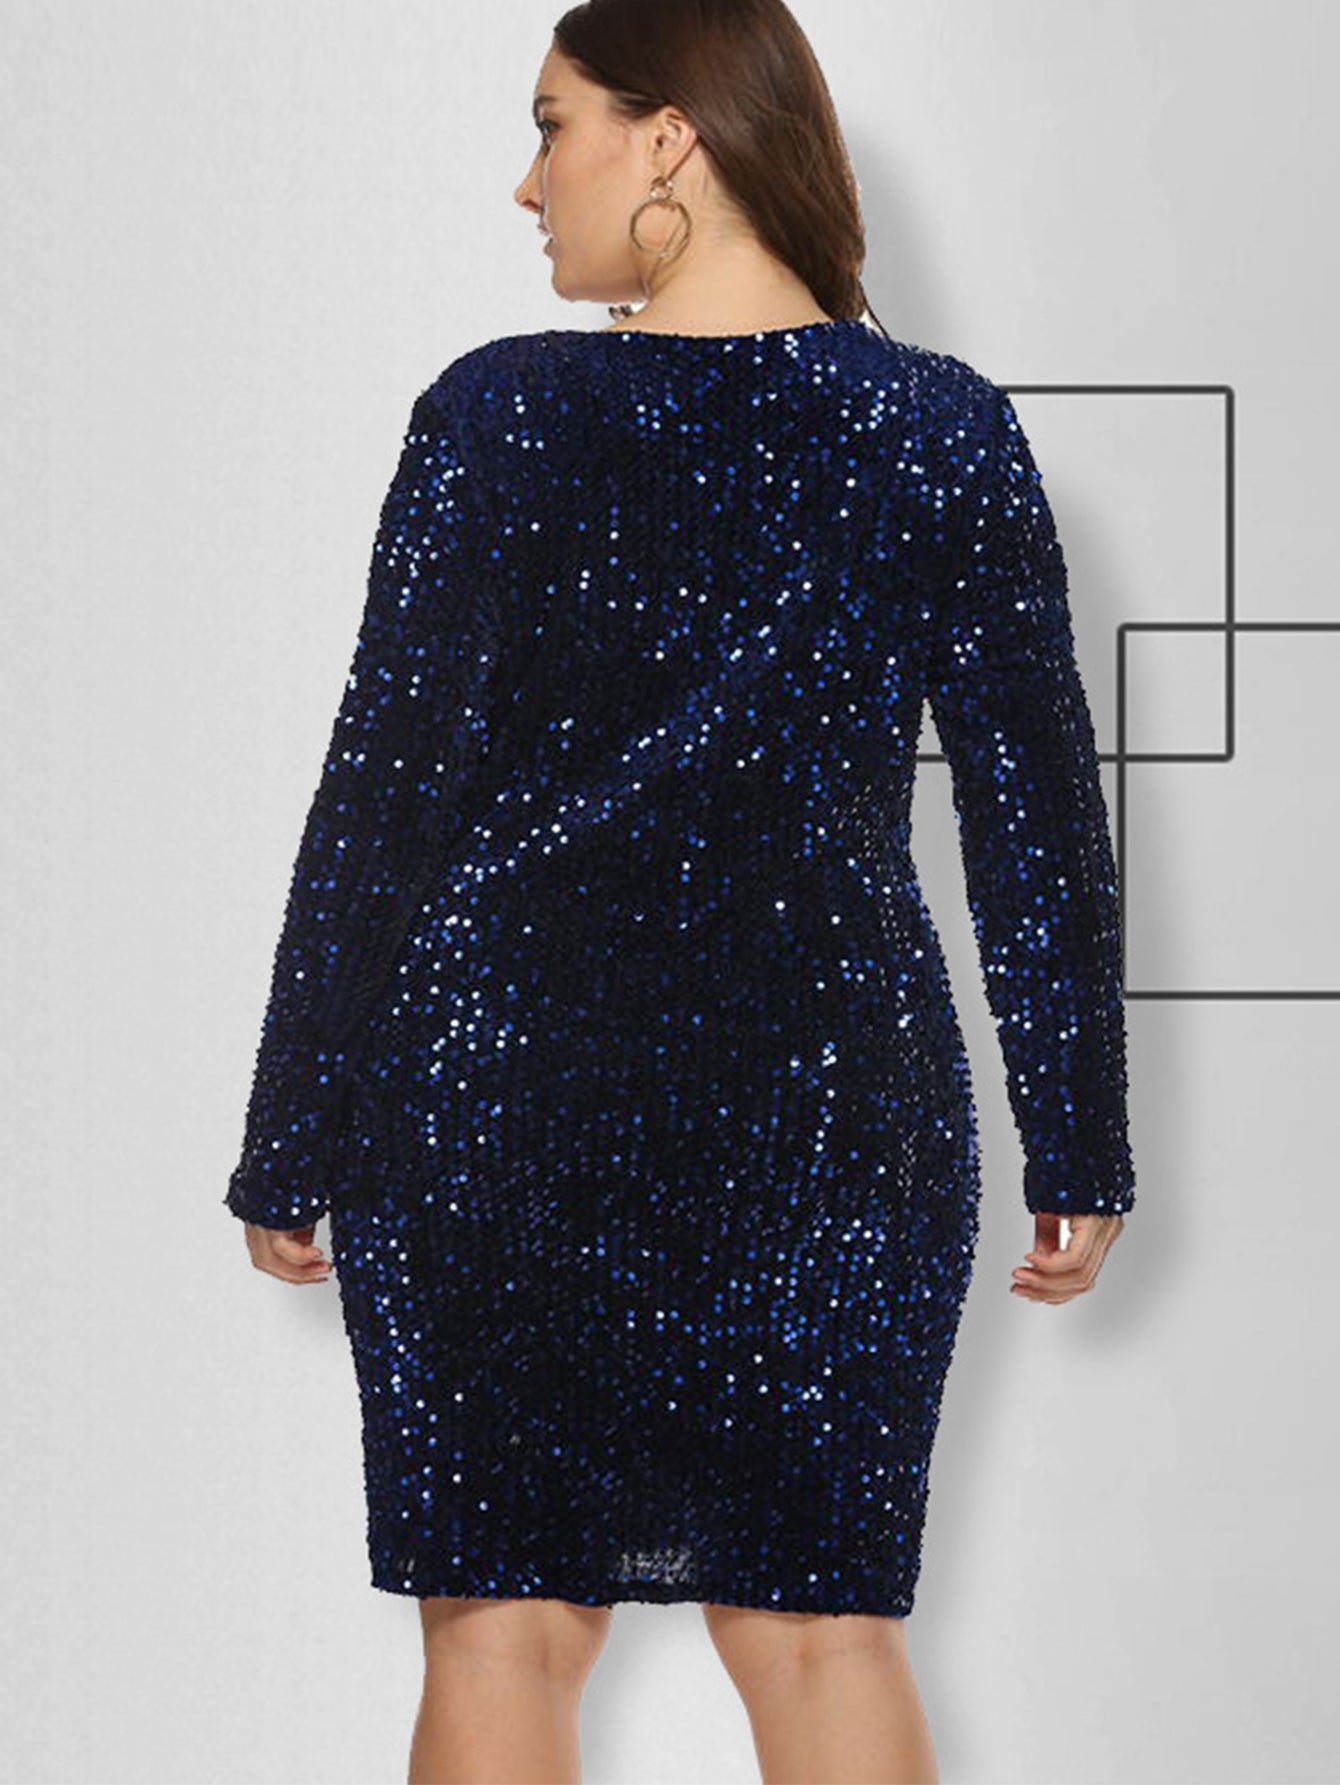 Plus Size Sequins Glitter Bodycon Dress Sai Feel